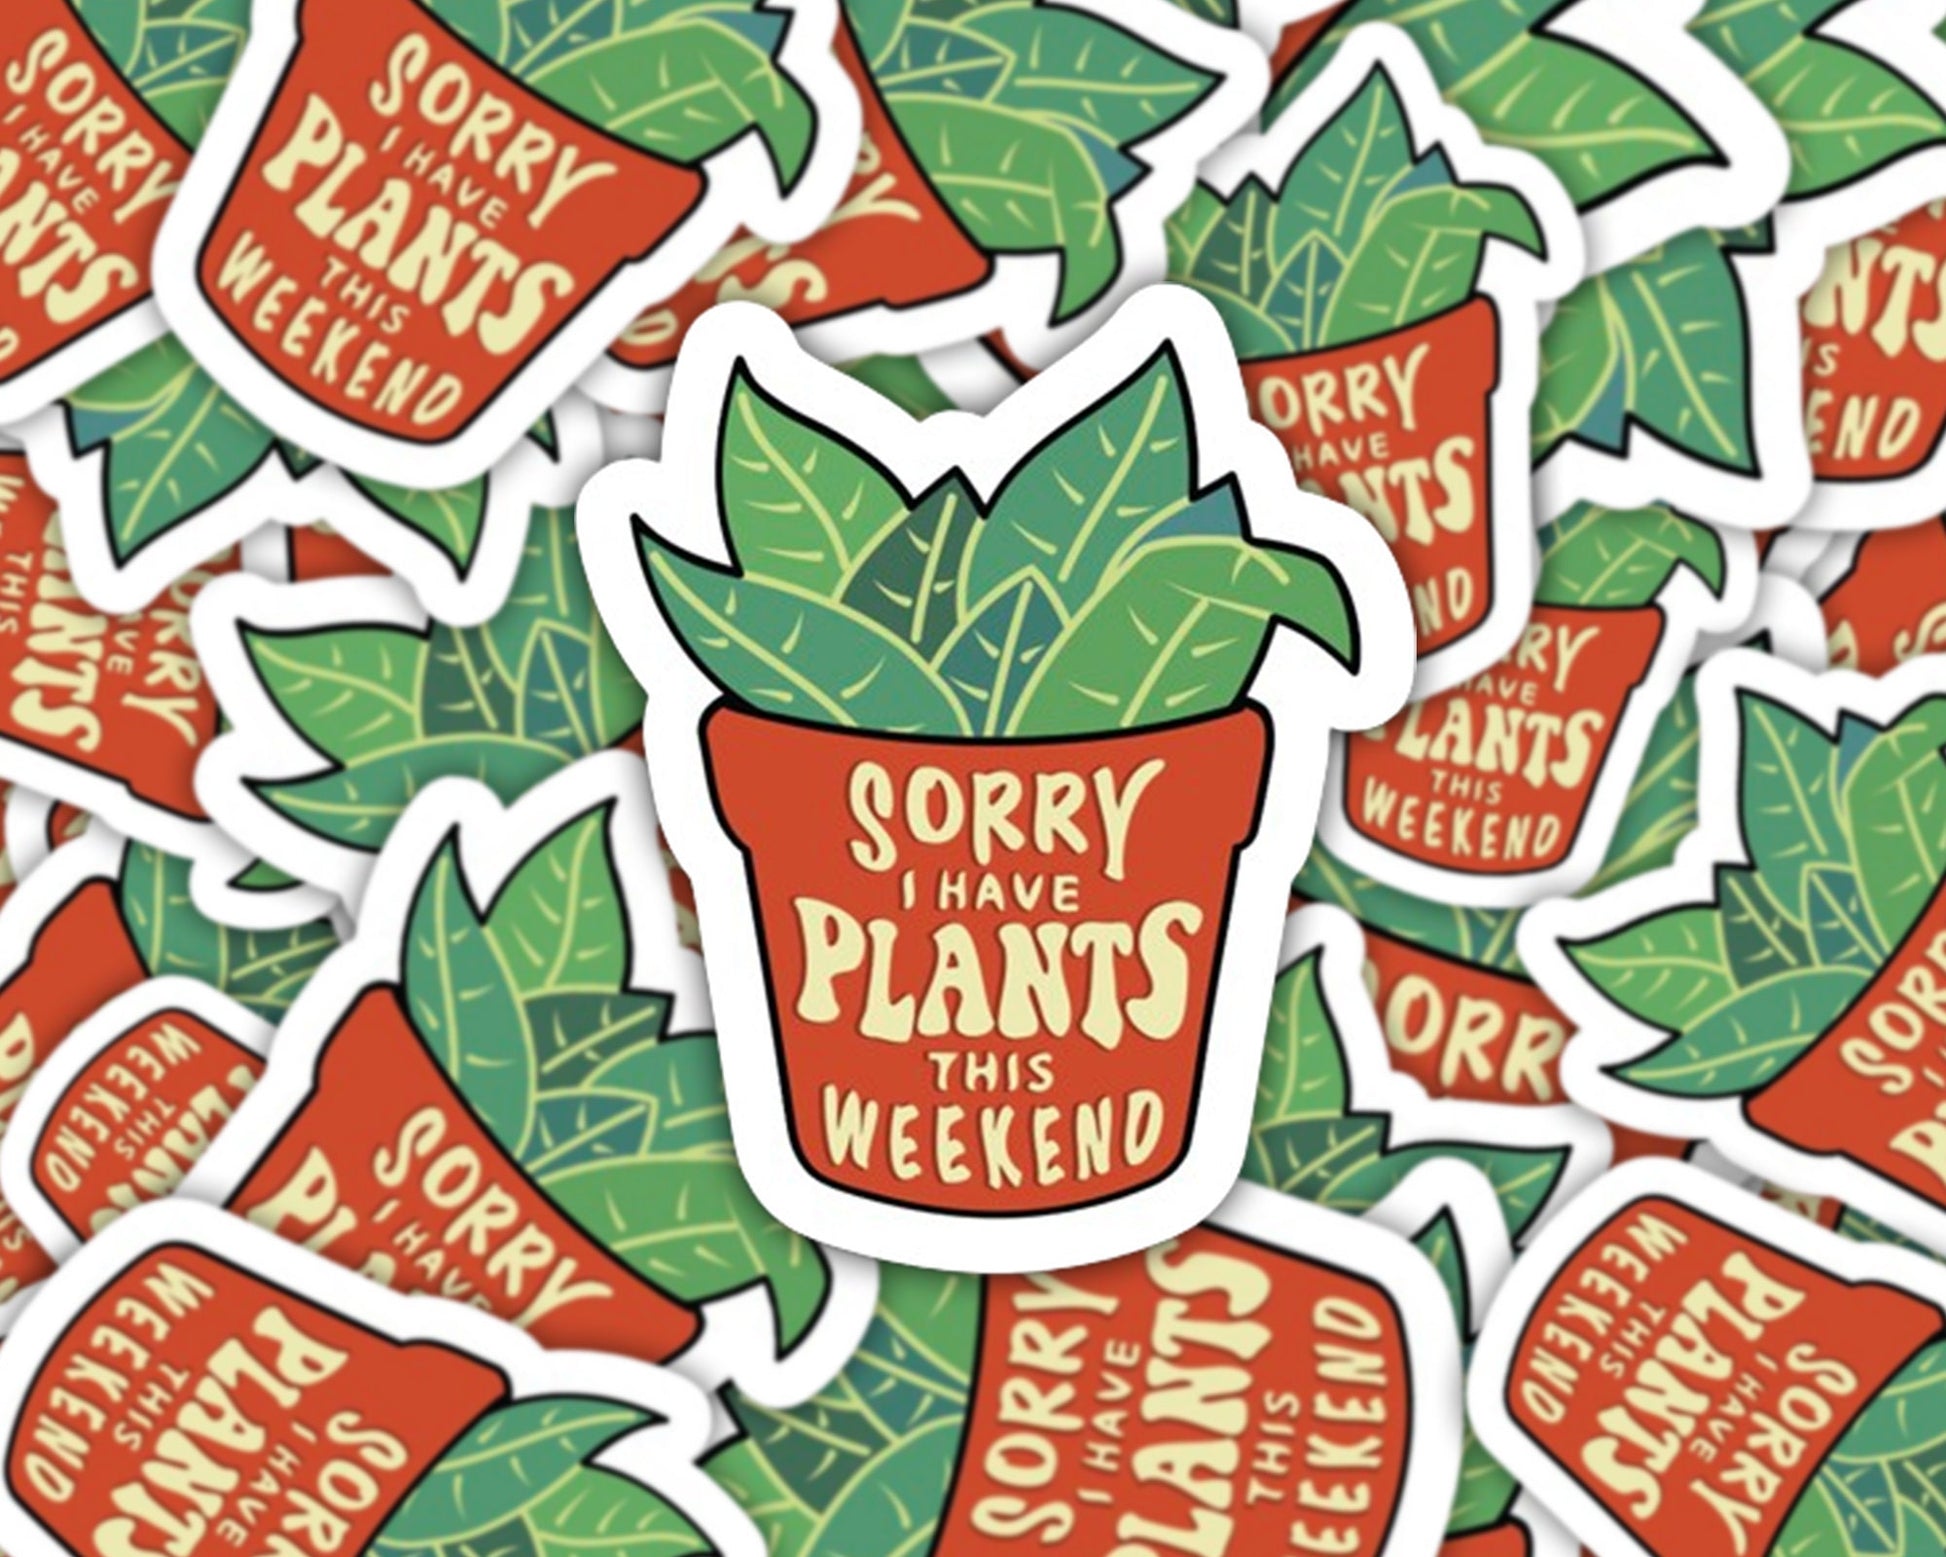 sorry i have plants sticker, plant sticker for water bottle, plant store, funny plant sticker, plant pot sticker